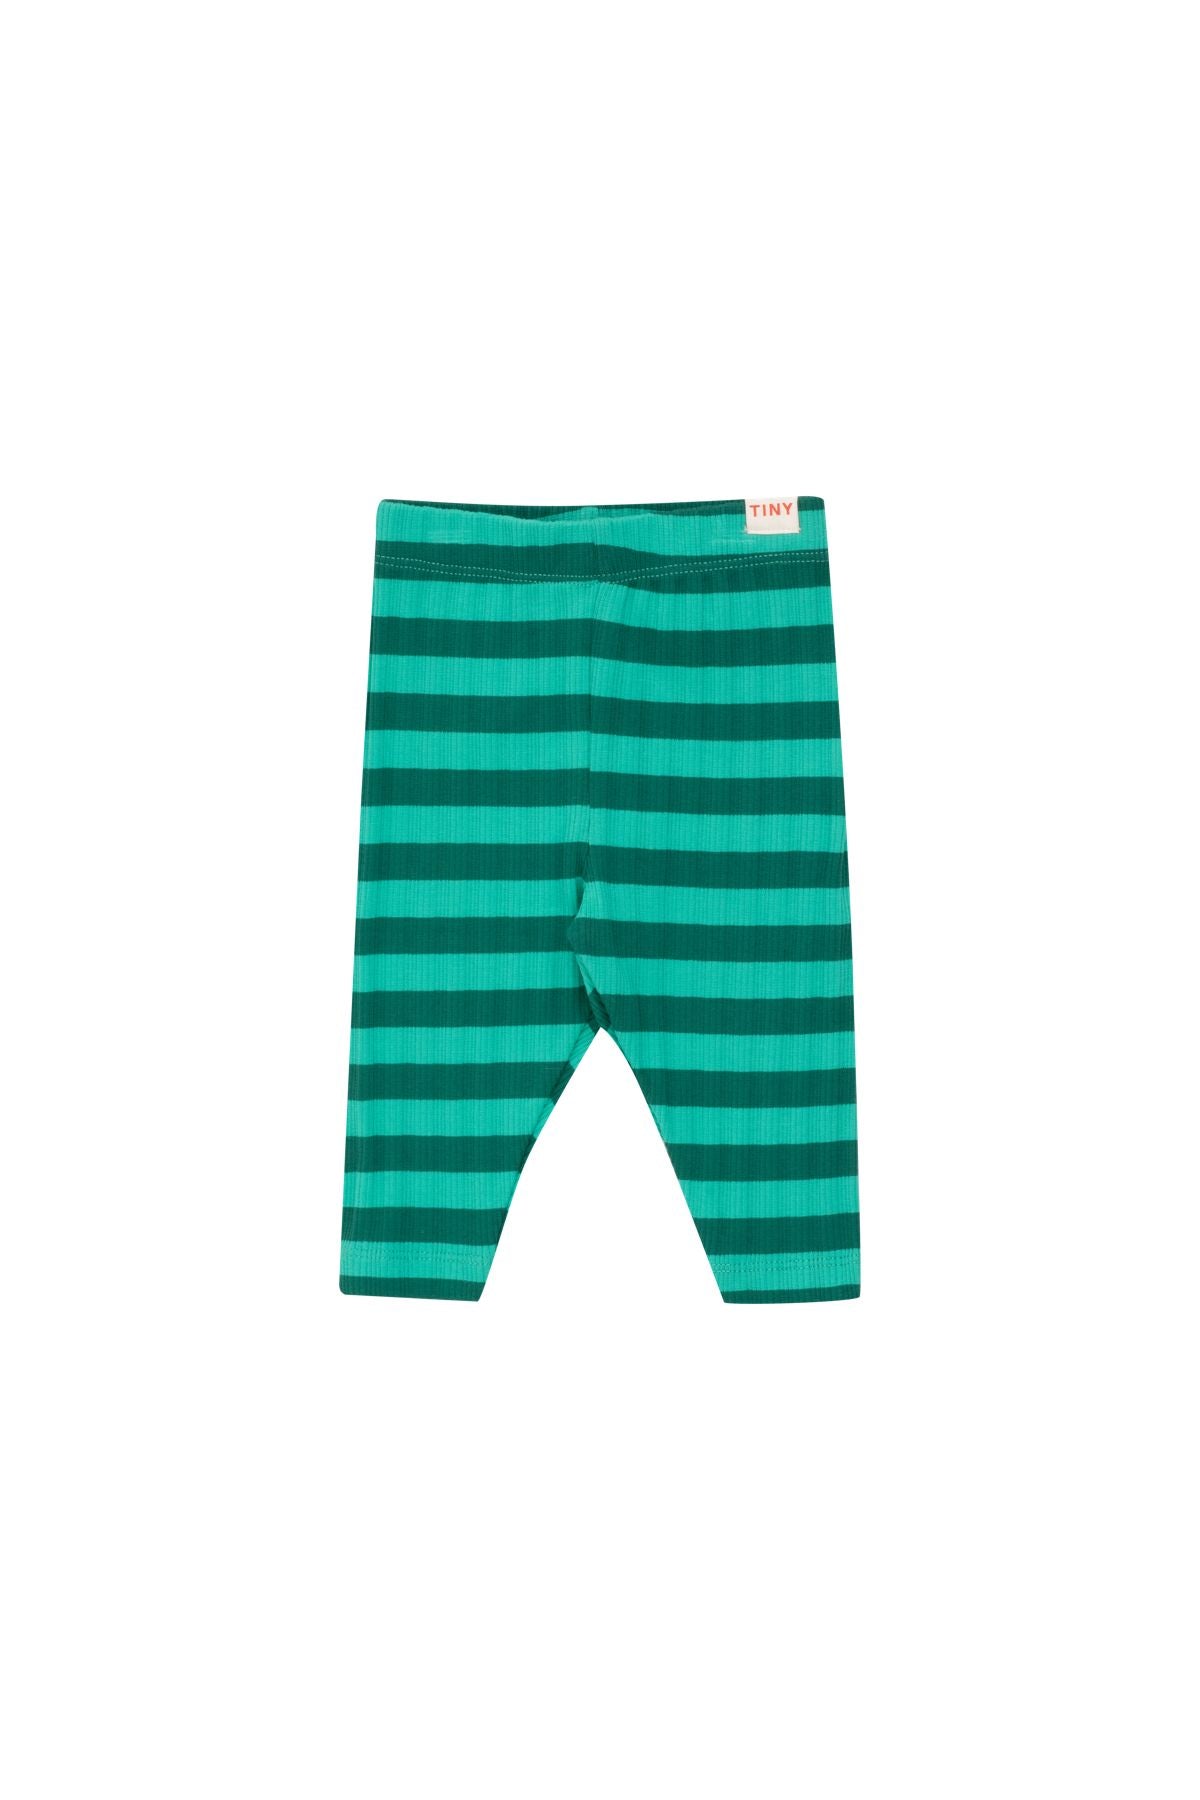 Tiny Cottons Stripes Baby Pants -  Emerald/ Dark Green